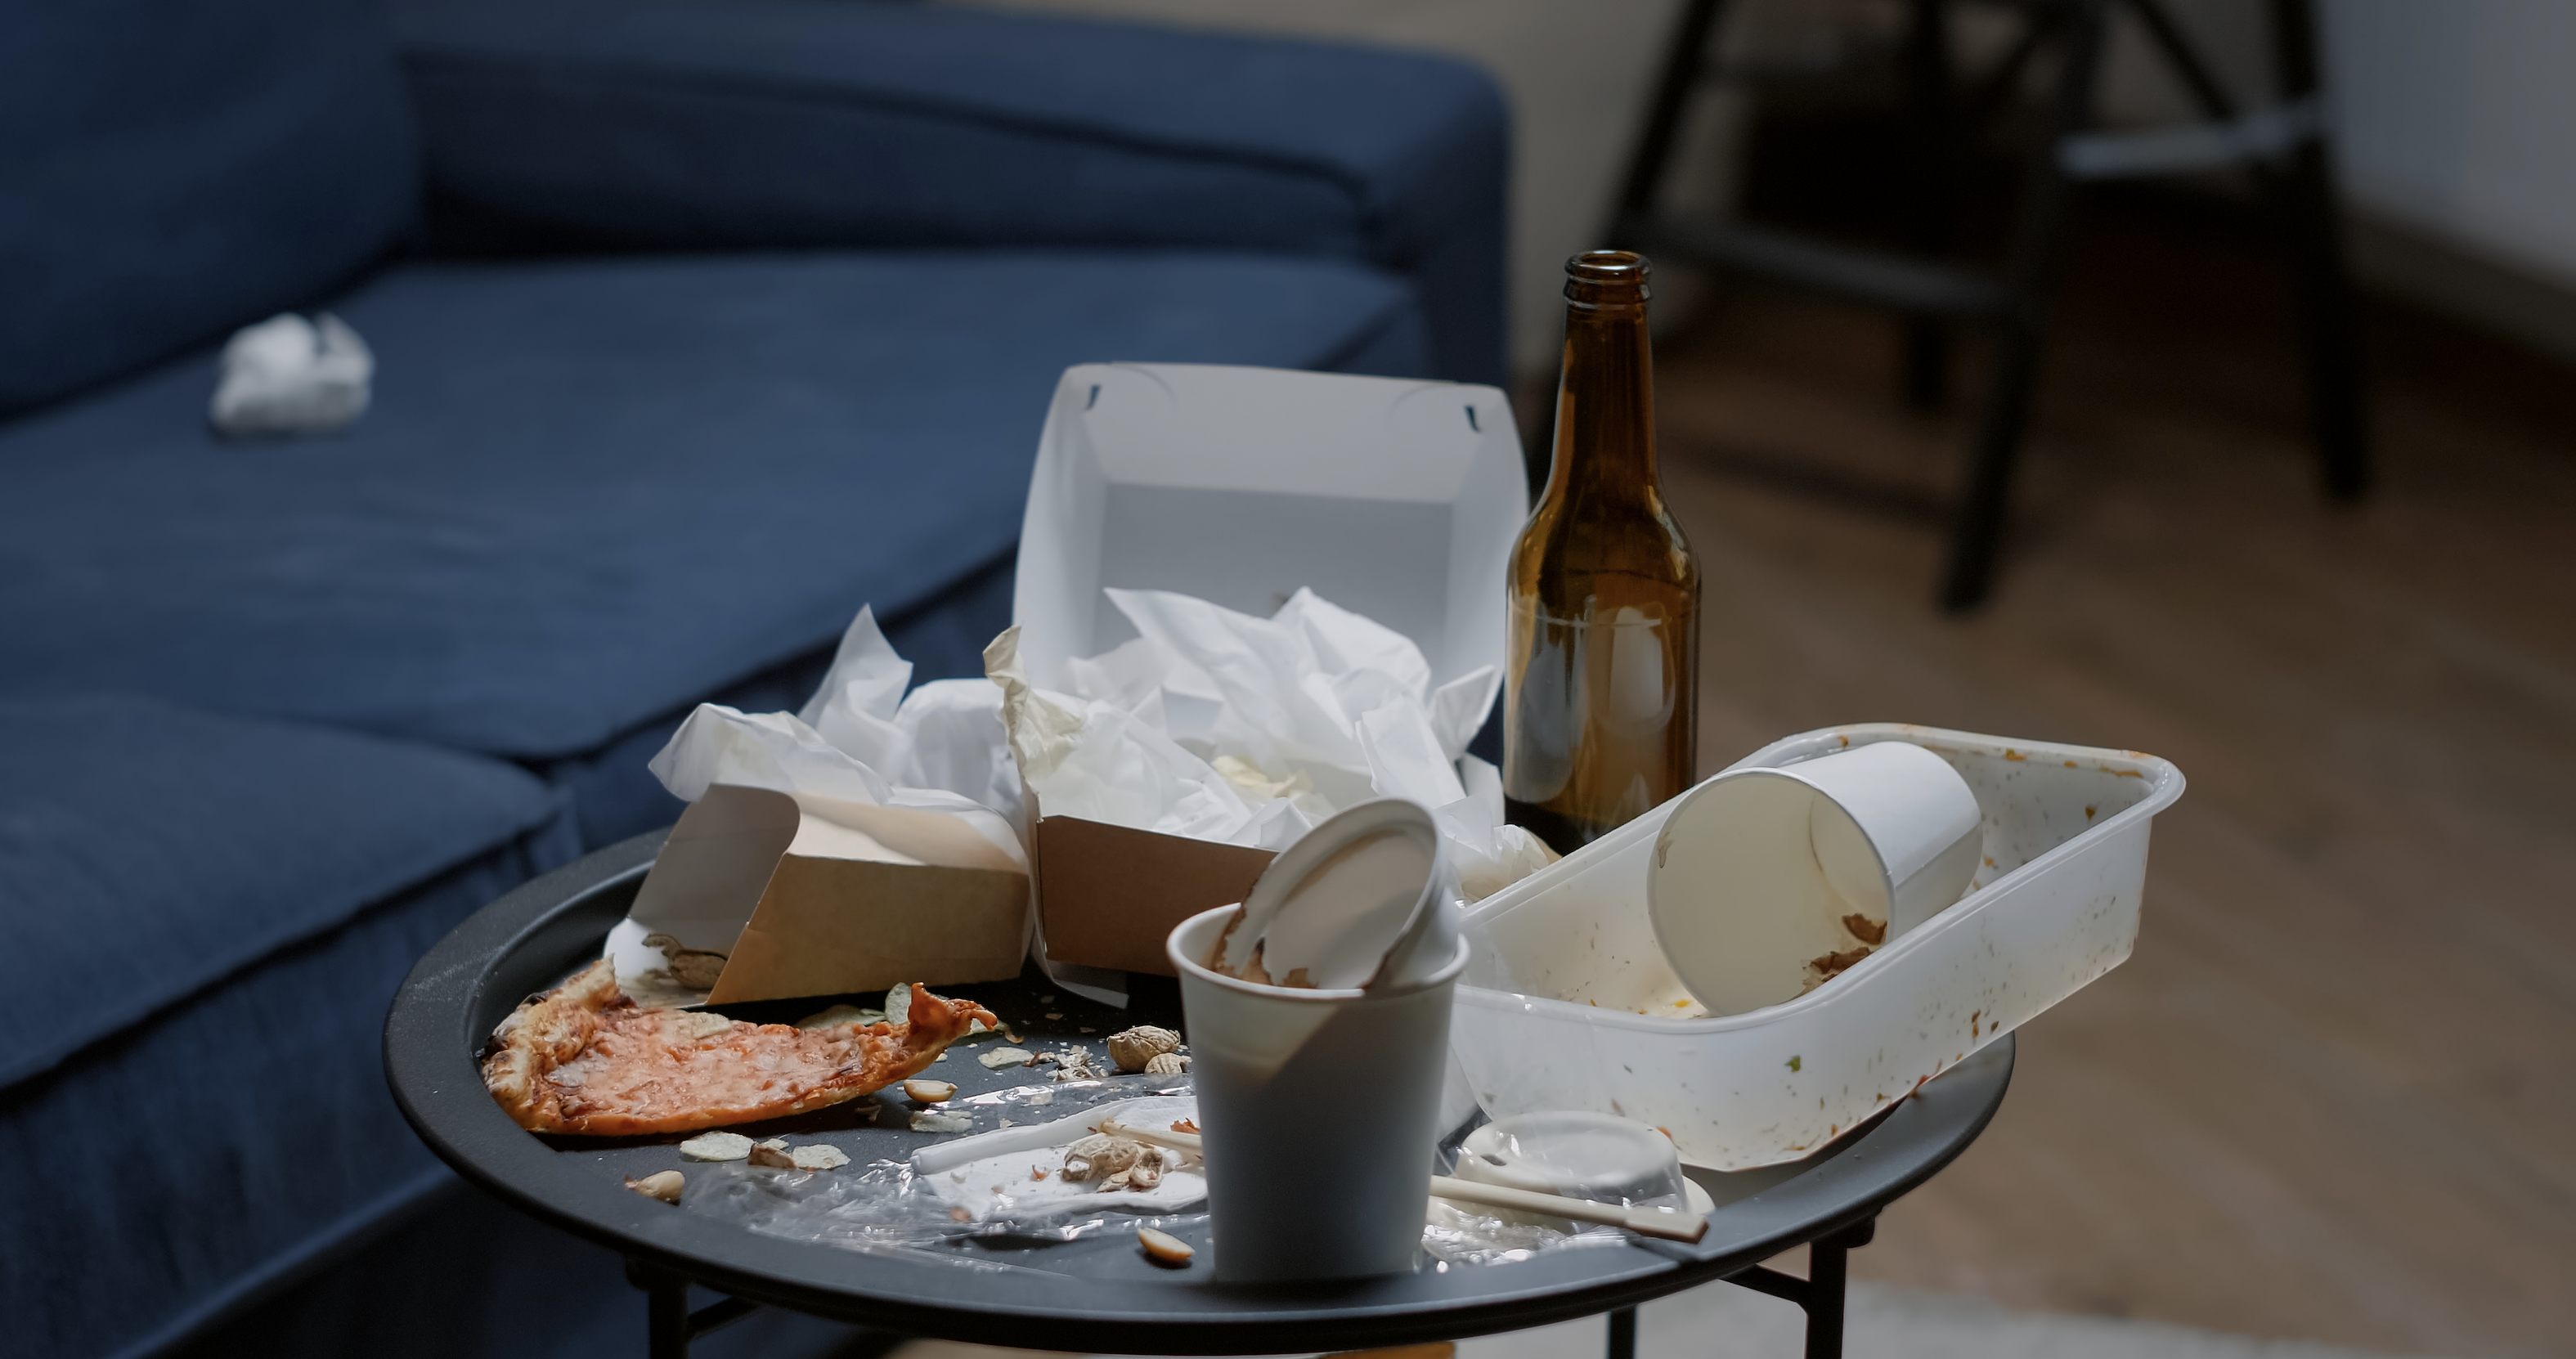 https://news.kirby.com/hubfs/close-up-of-messy-table-leftover-food-dirty-dish-2021-12-09-11-10-43-utc.JPG.png